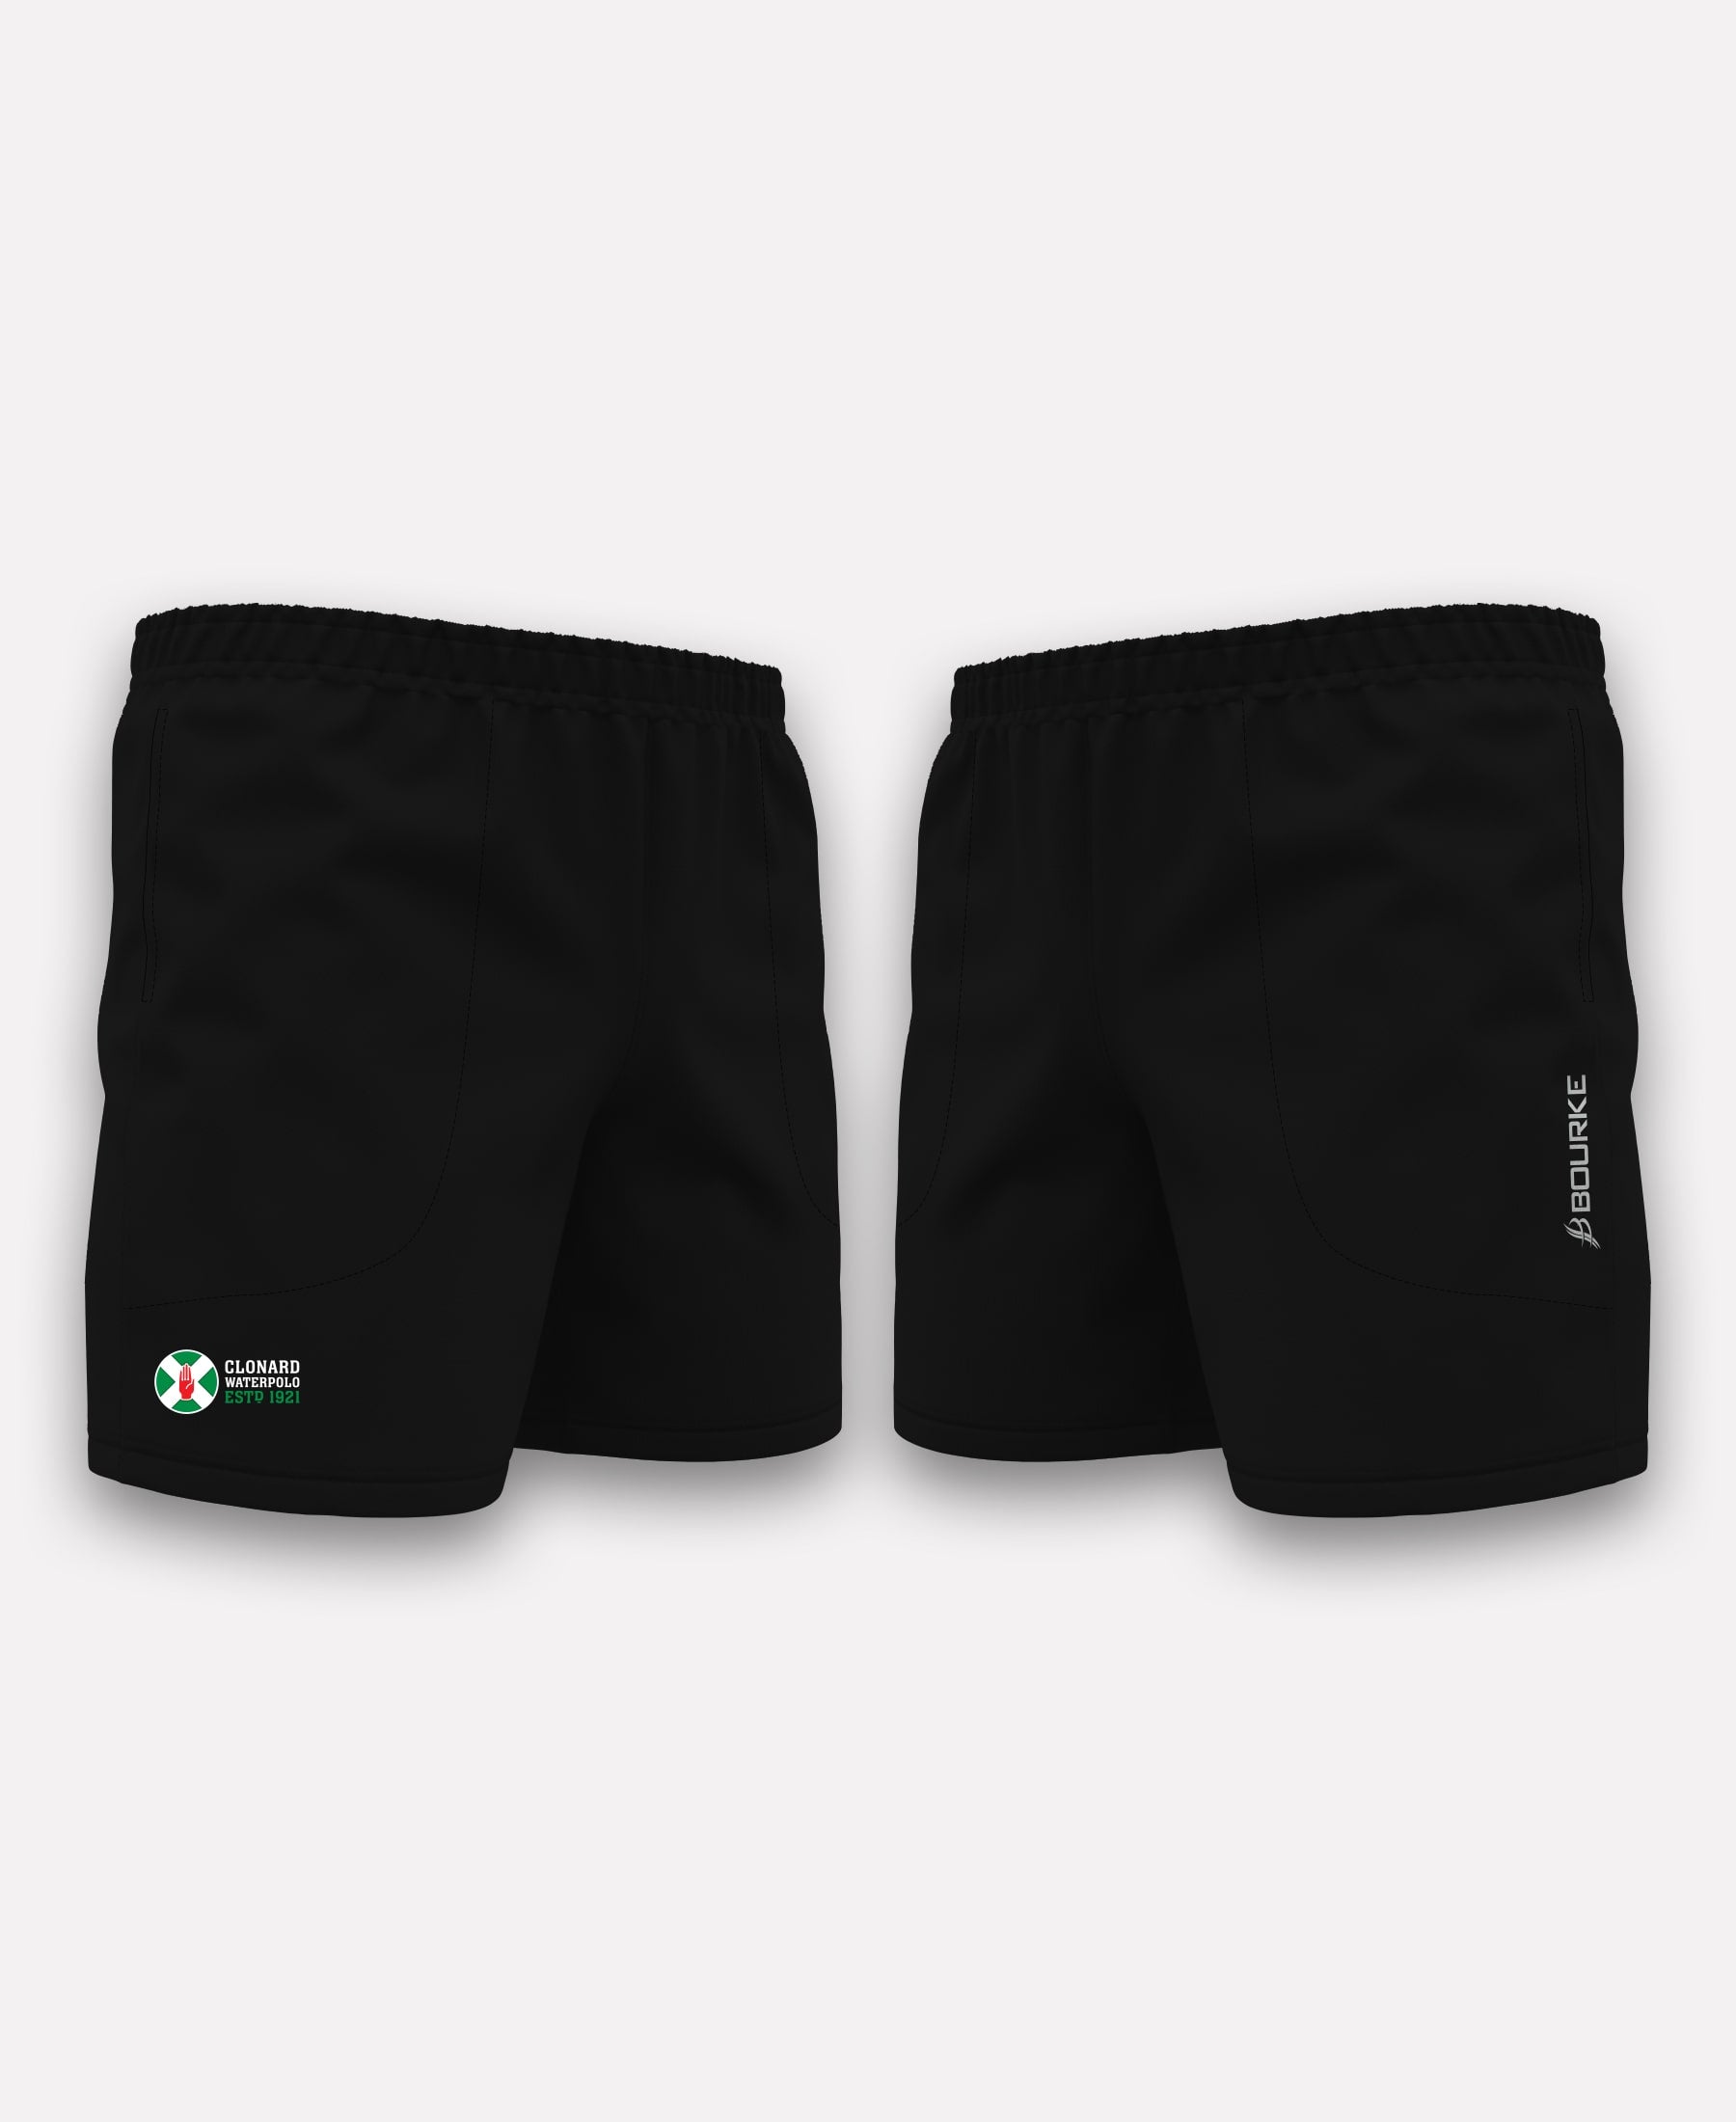 Clonard Waterpolo TACA Gym Shorts